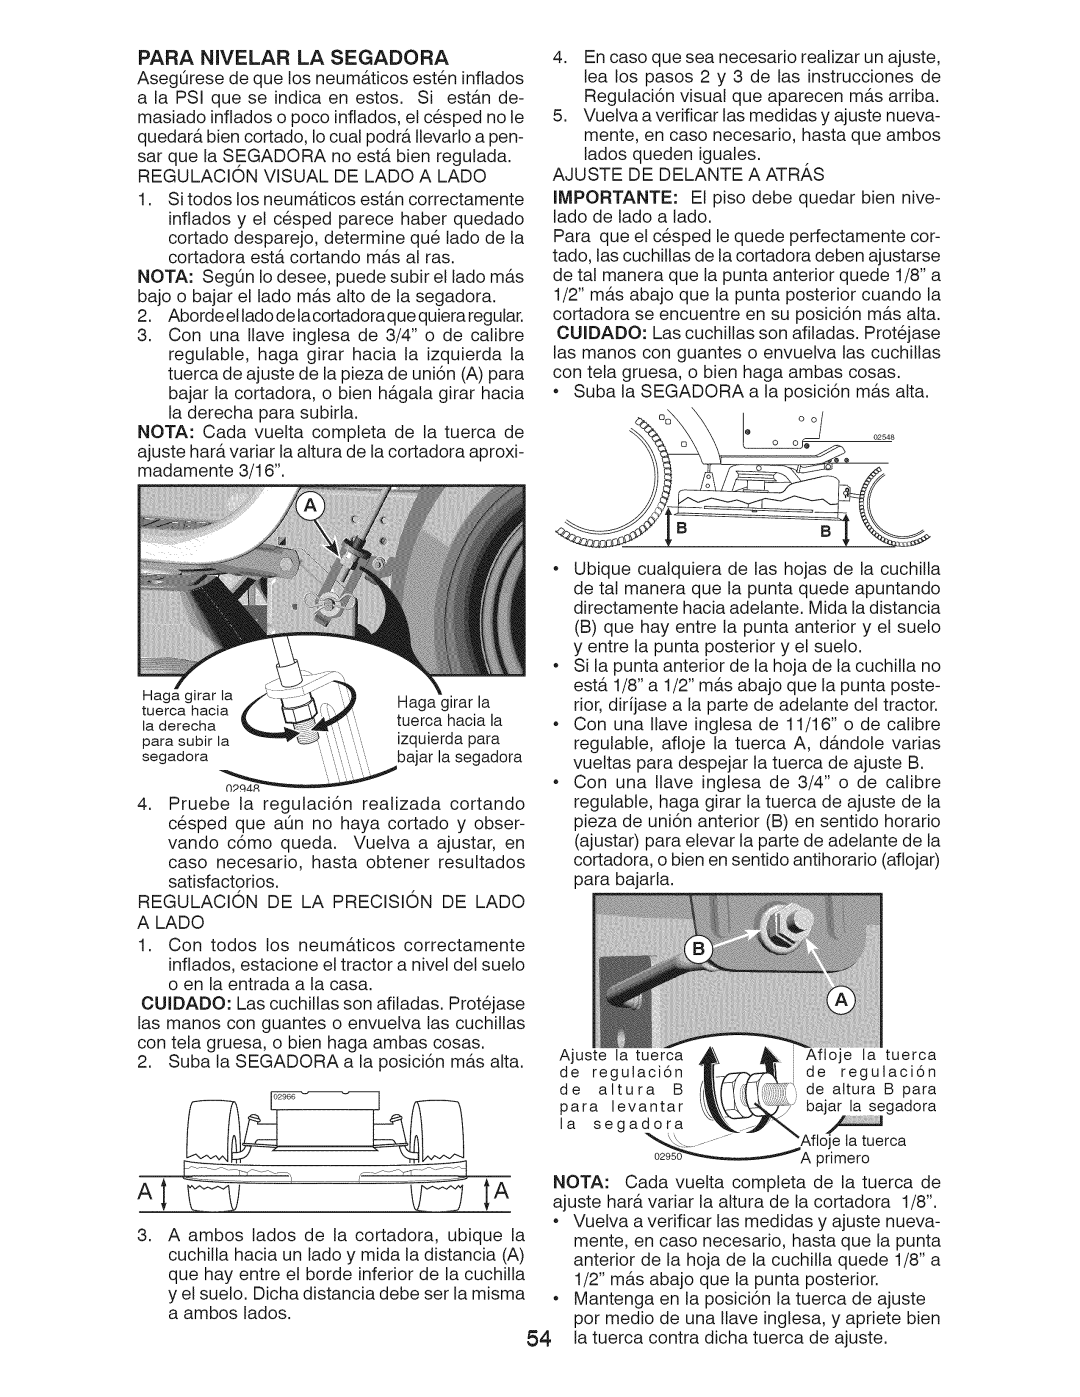 Craftsman 917.289240 owner manual ASlA, Para Nivelar La Segadora, f 